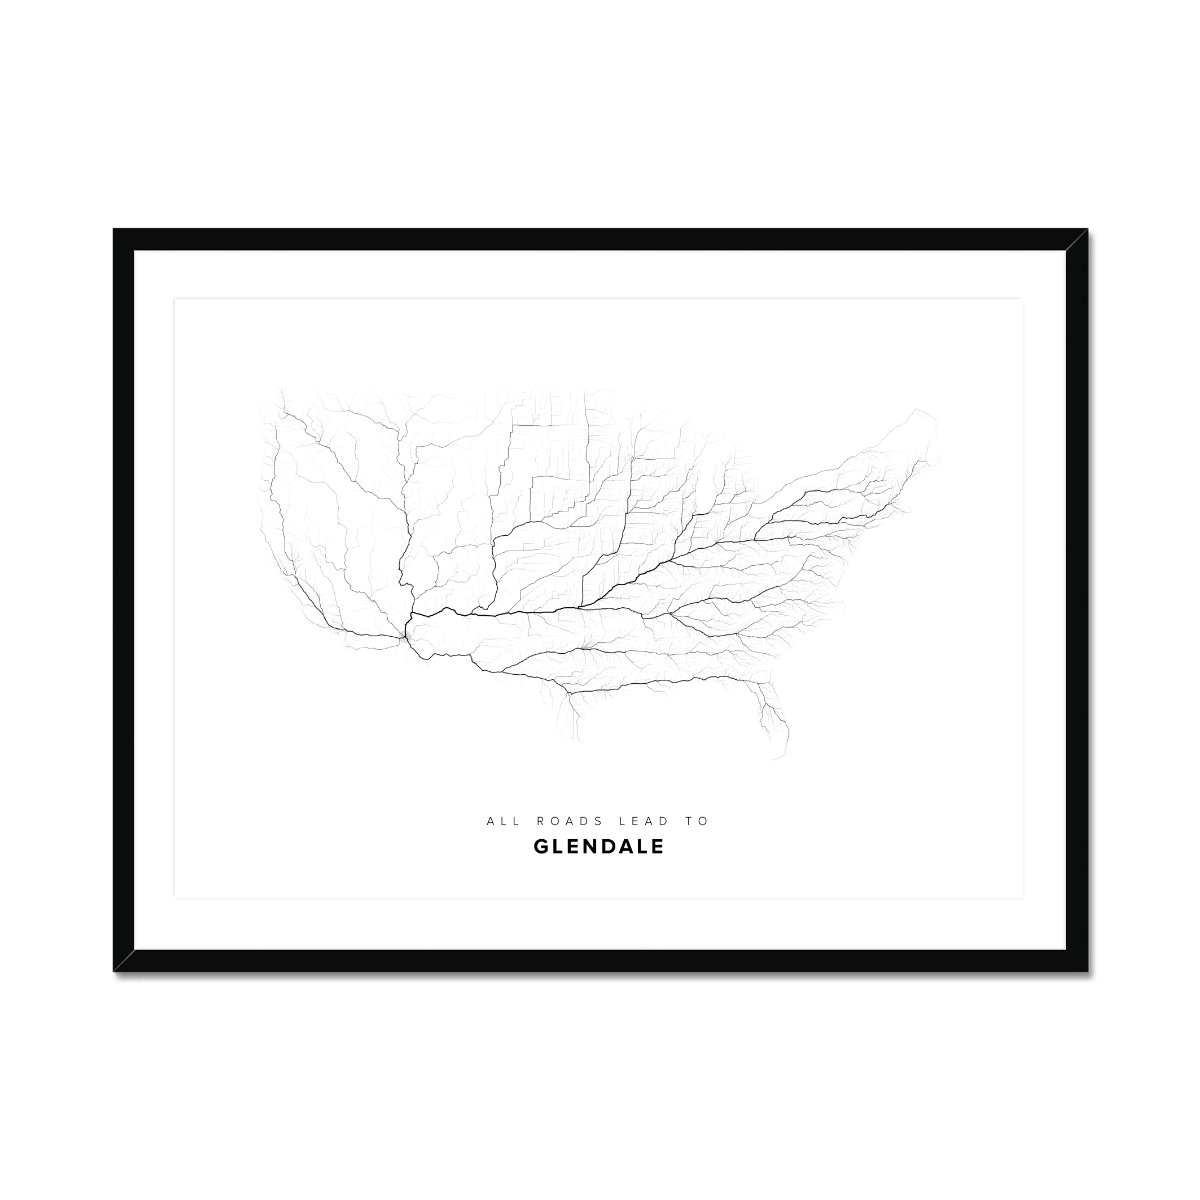 All roads lead to Glendale (United States of America) Fine Art Map Print